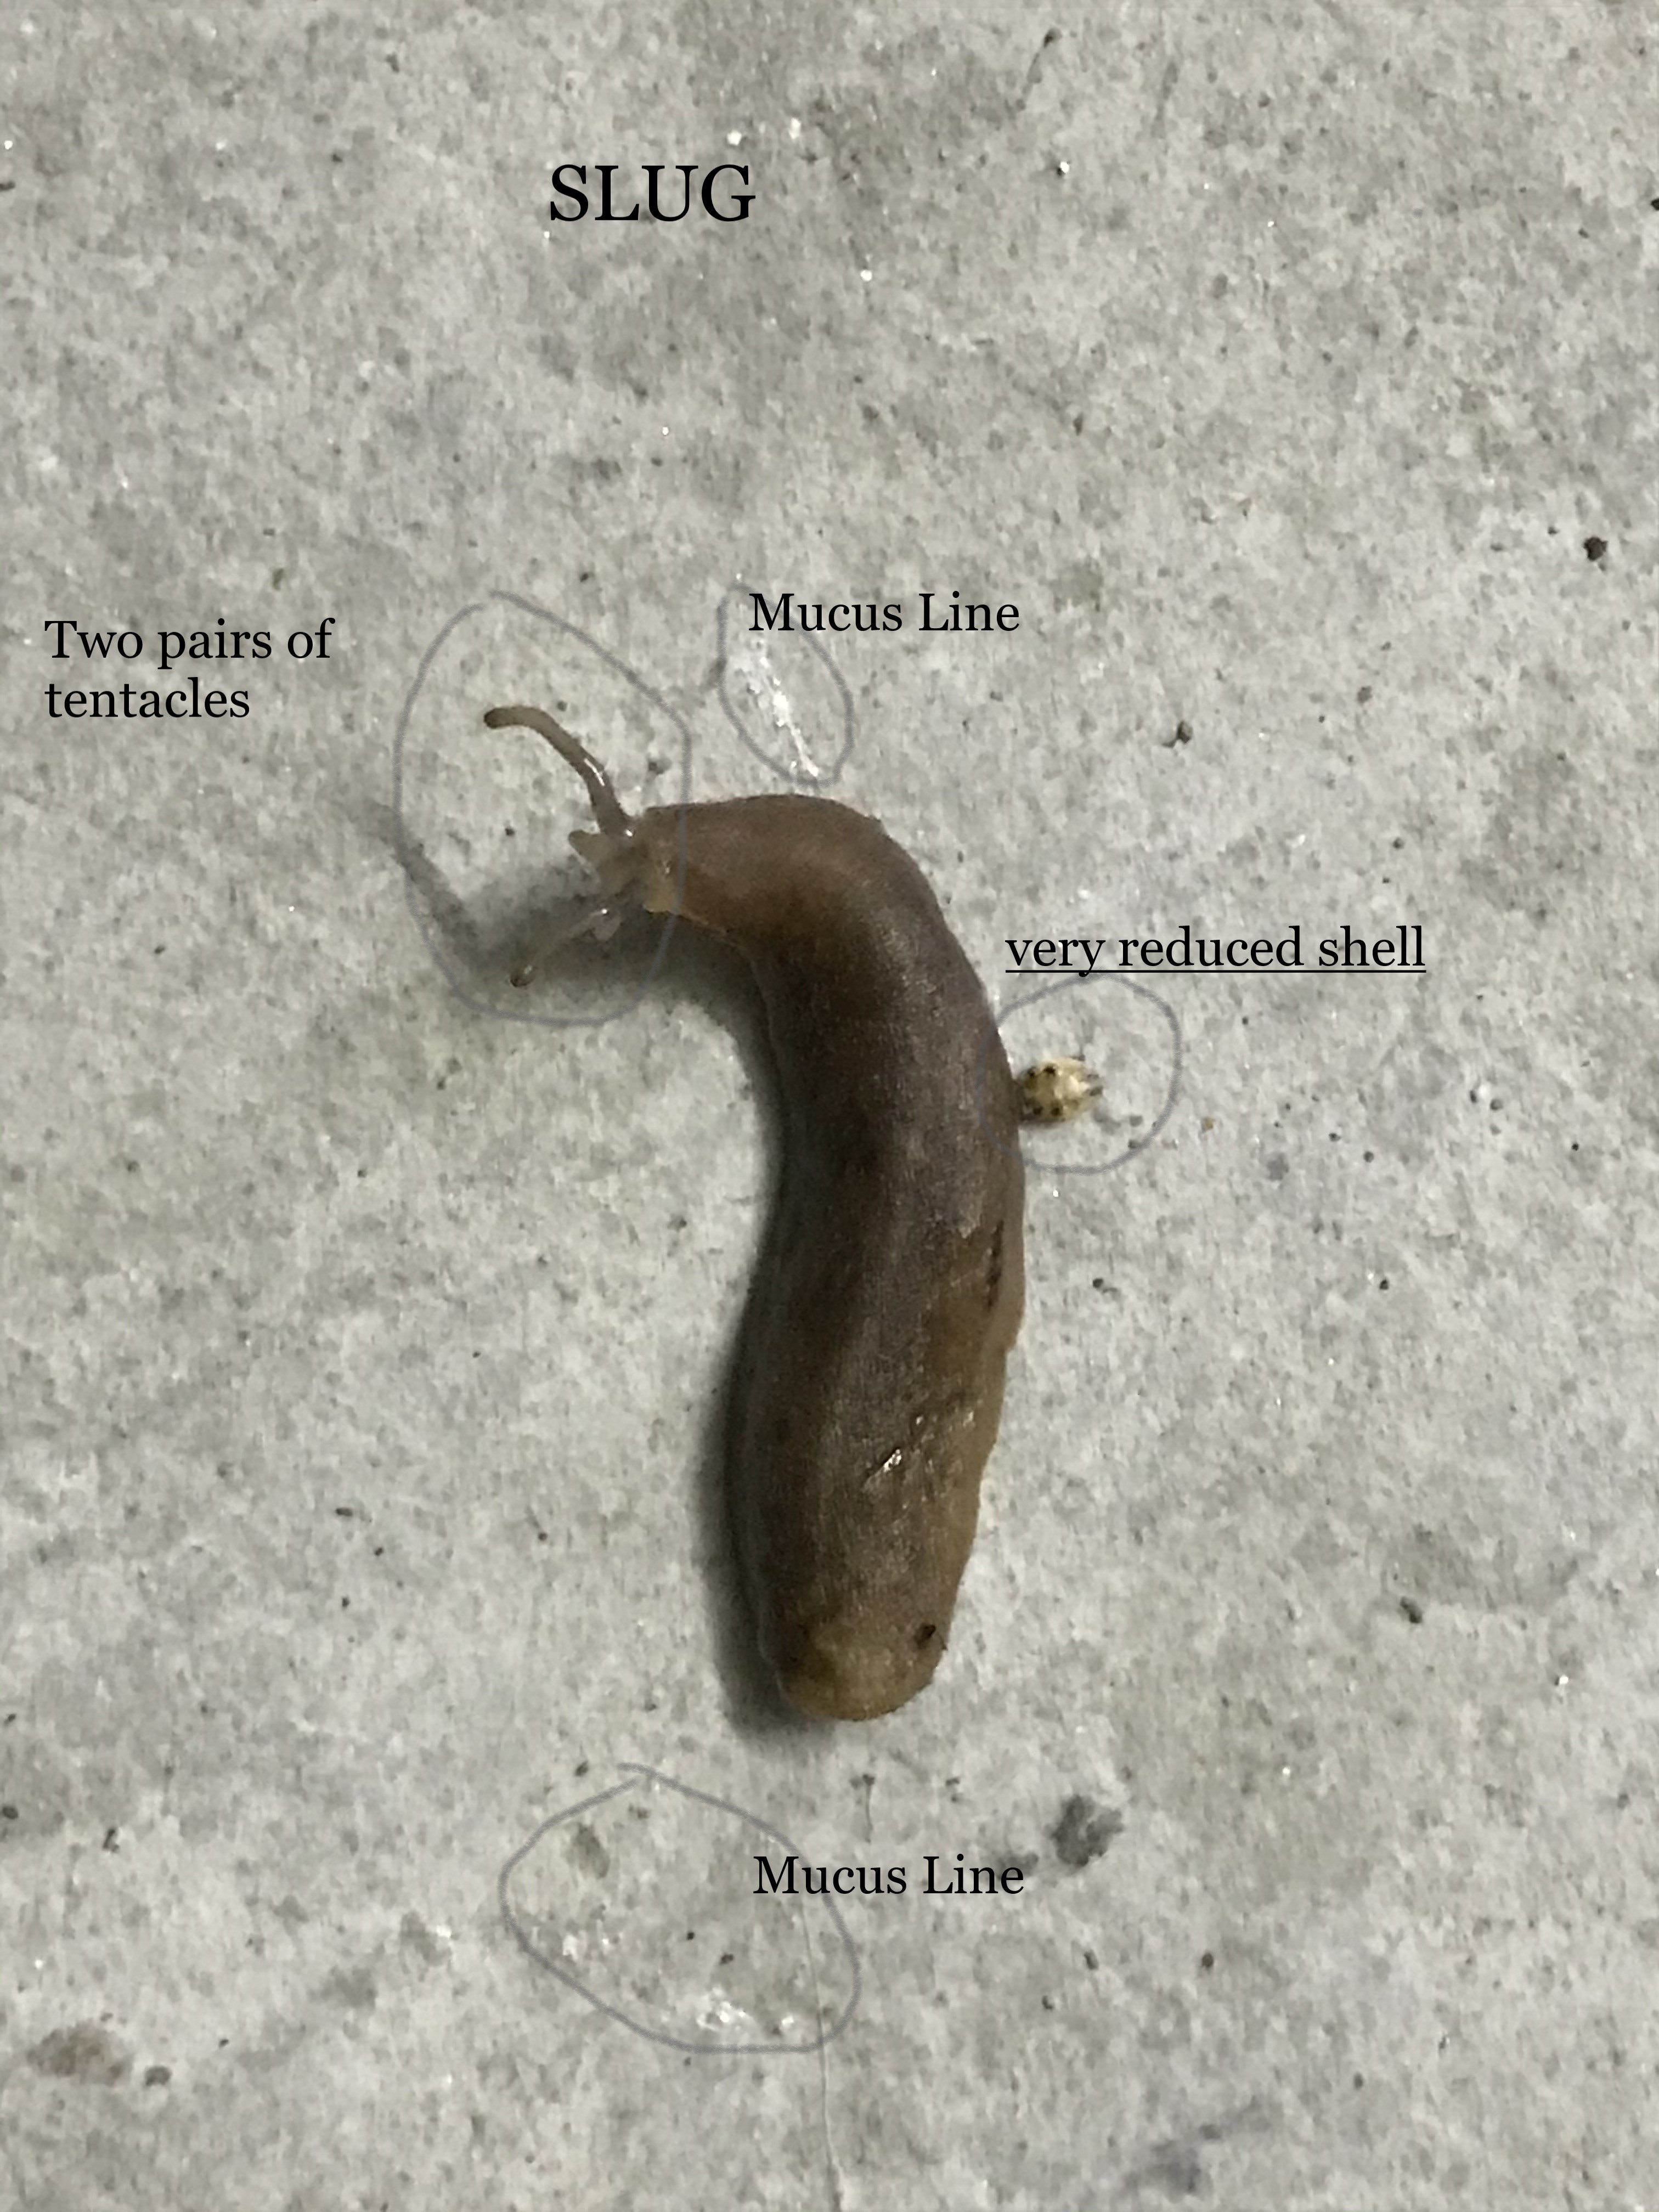 Slug with Marking